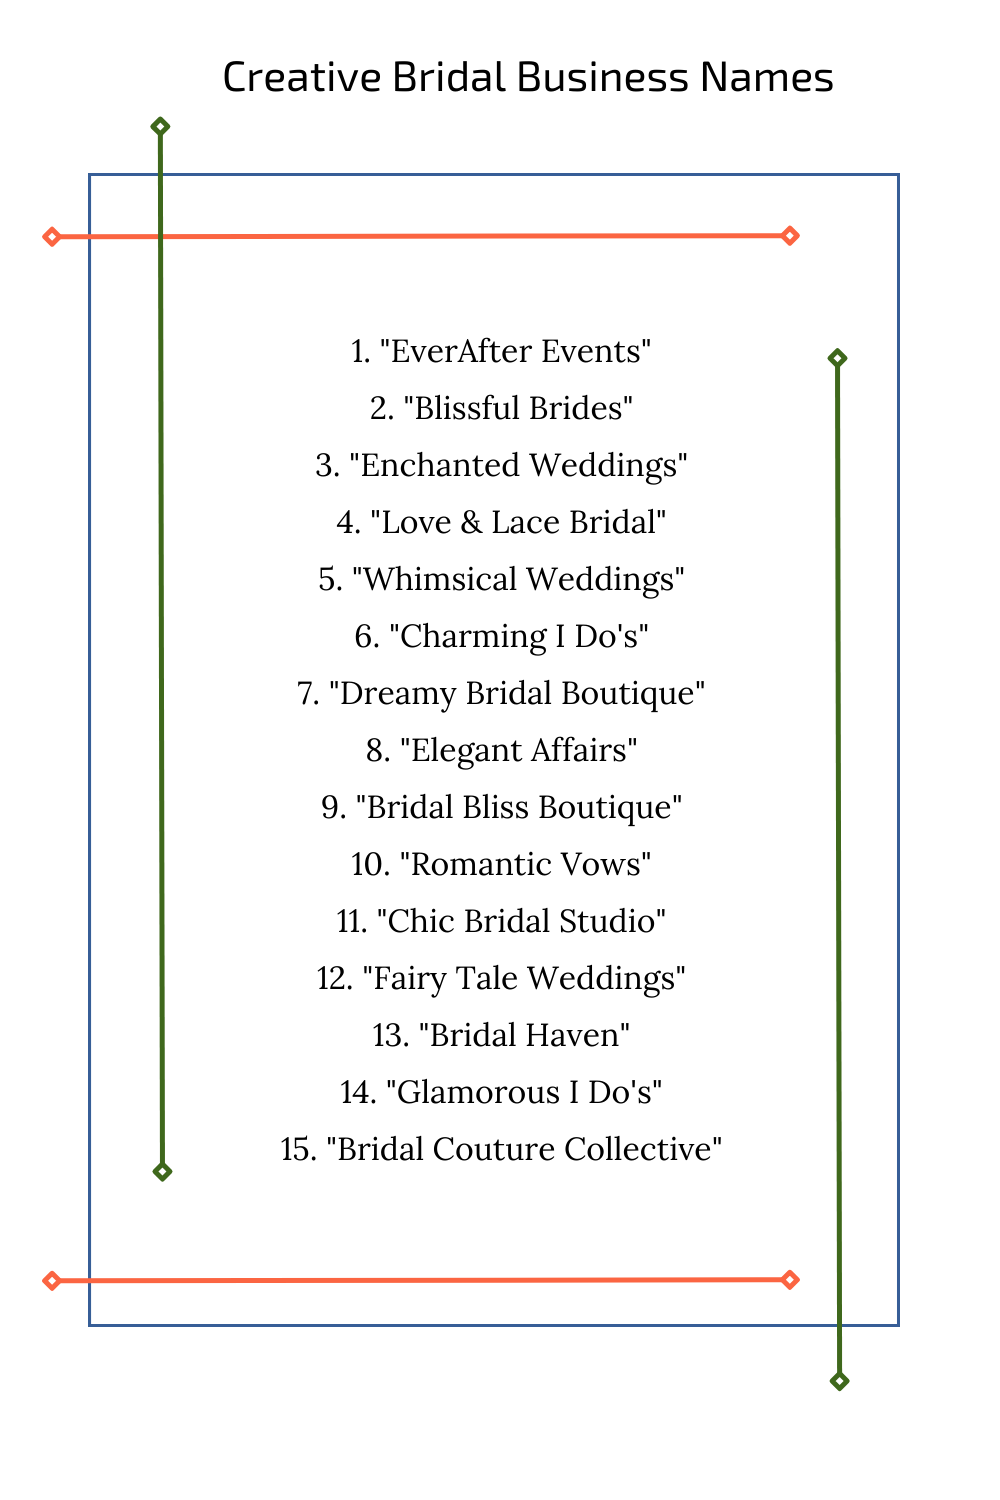 Creative Bridal Business Names